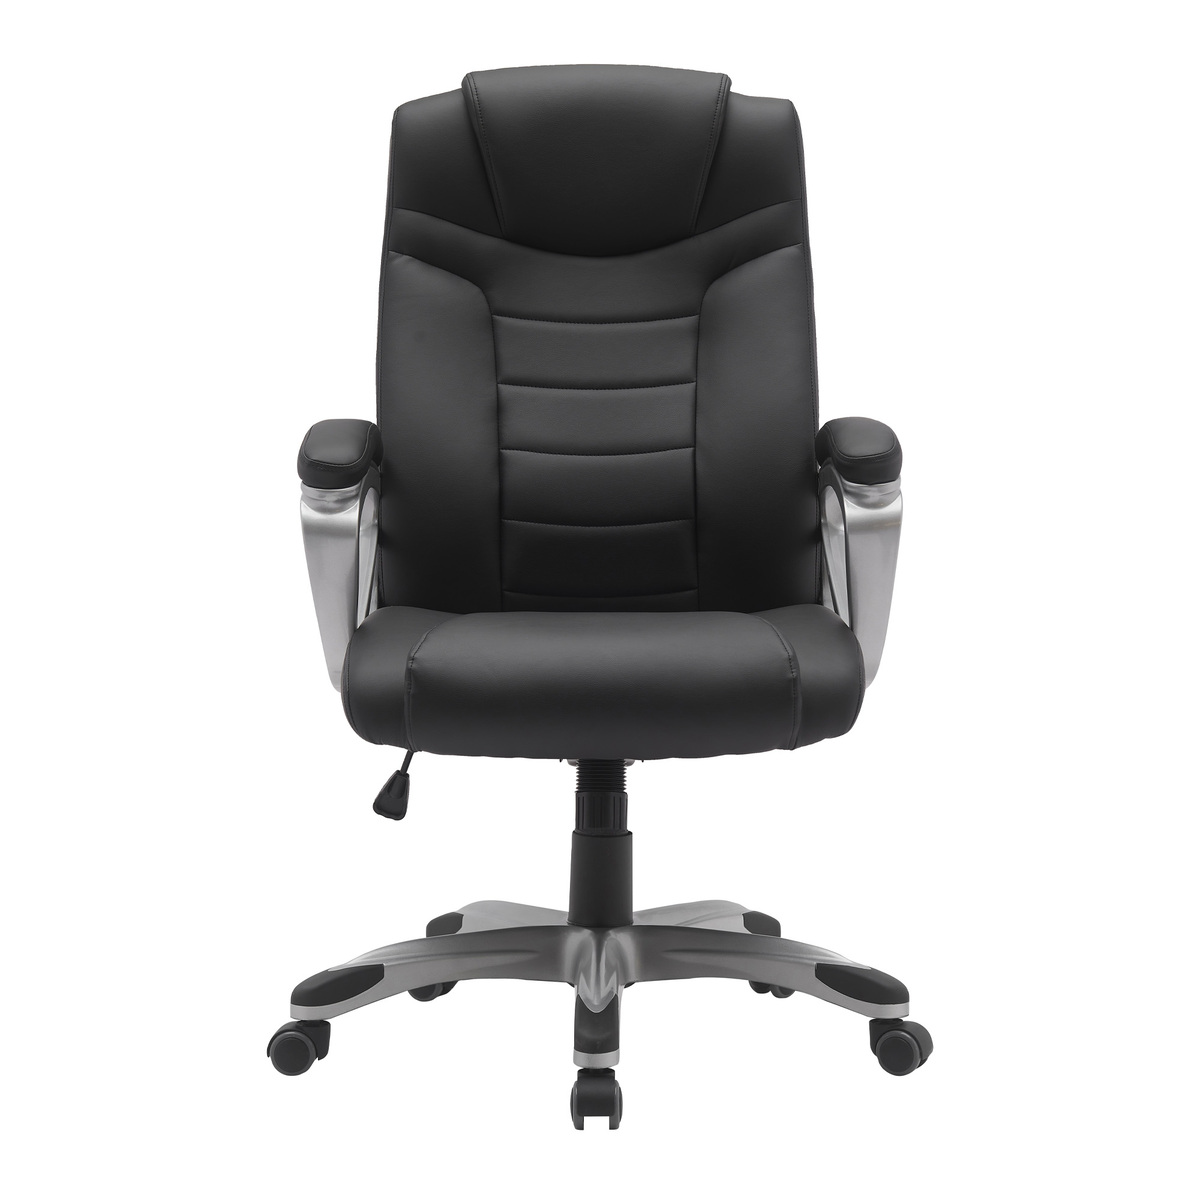 Maple Leaf Executive High Back Office Chair Black BS1303